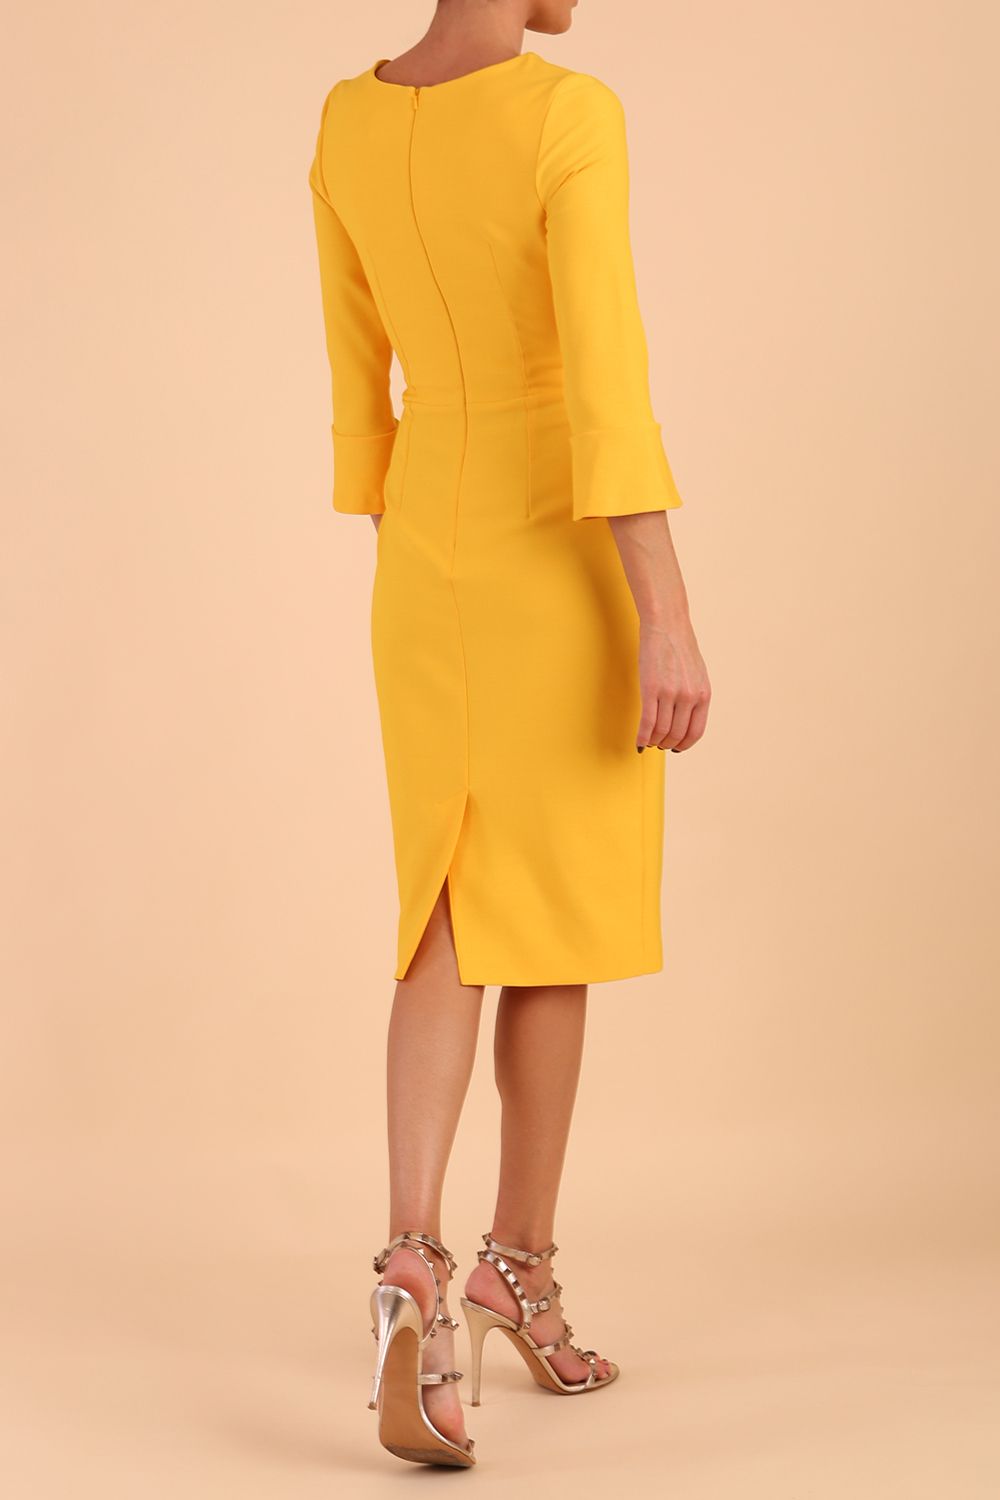 Model wearing diva catwalk Seed Orla Asymmetric Pencil Dress in Saffron Yellow back